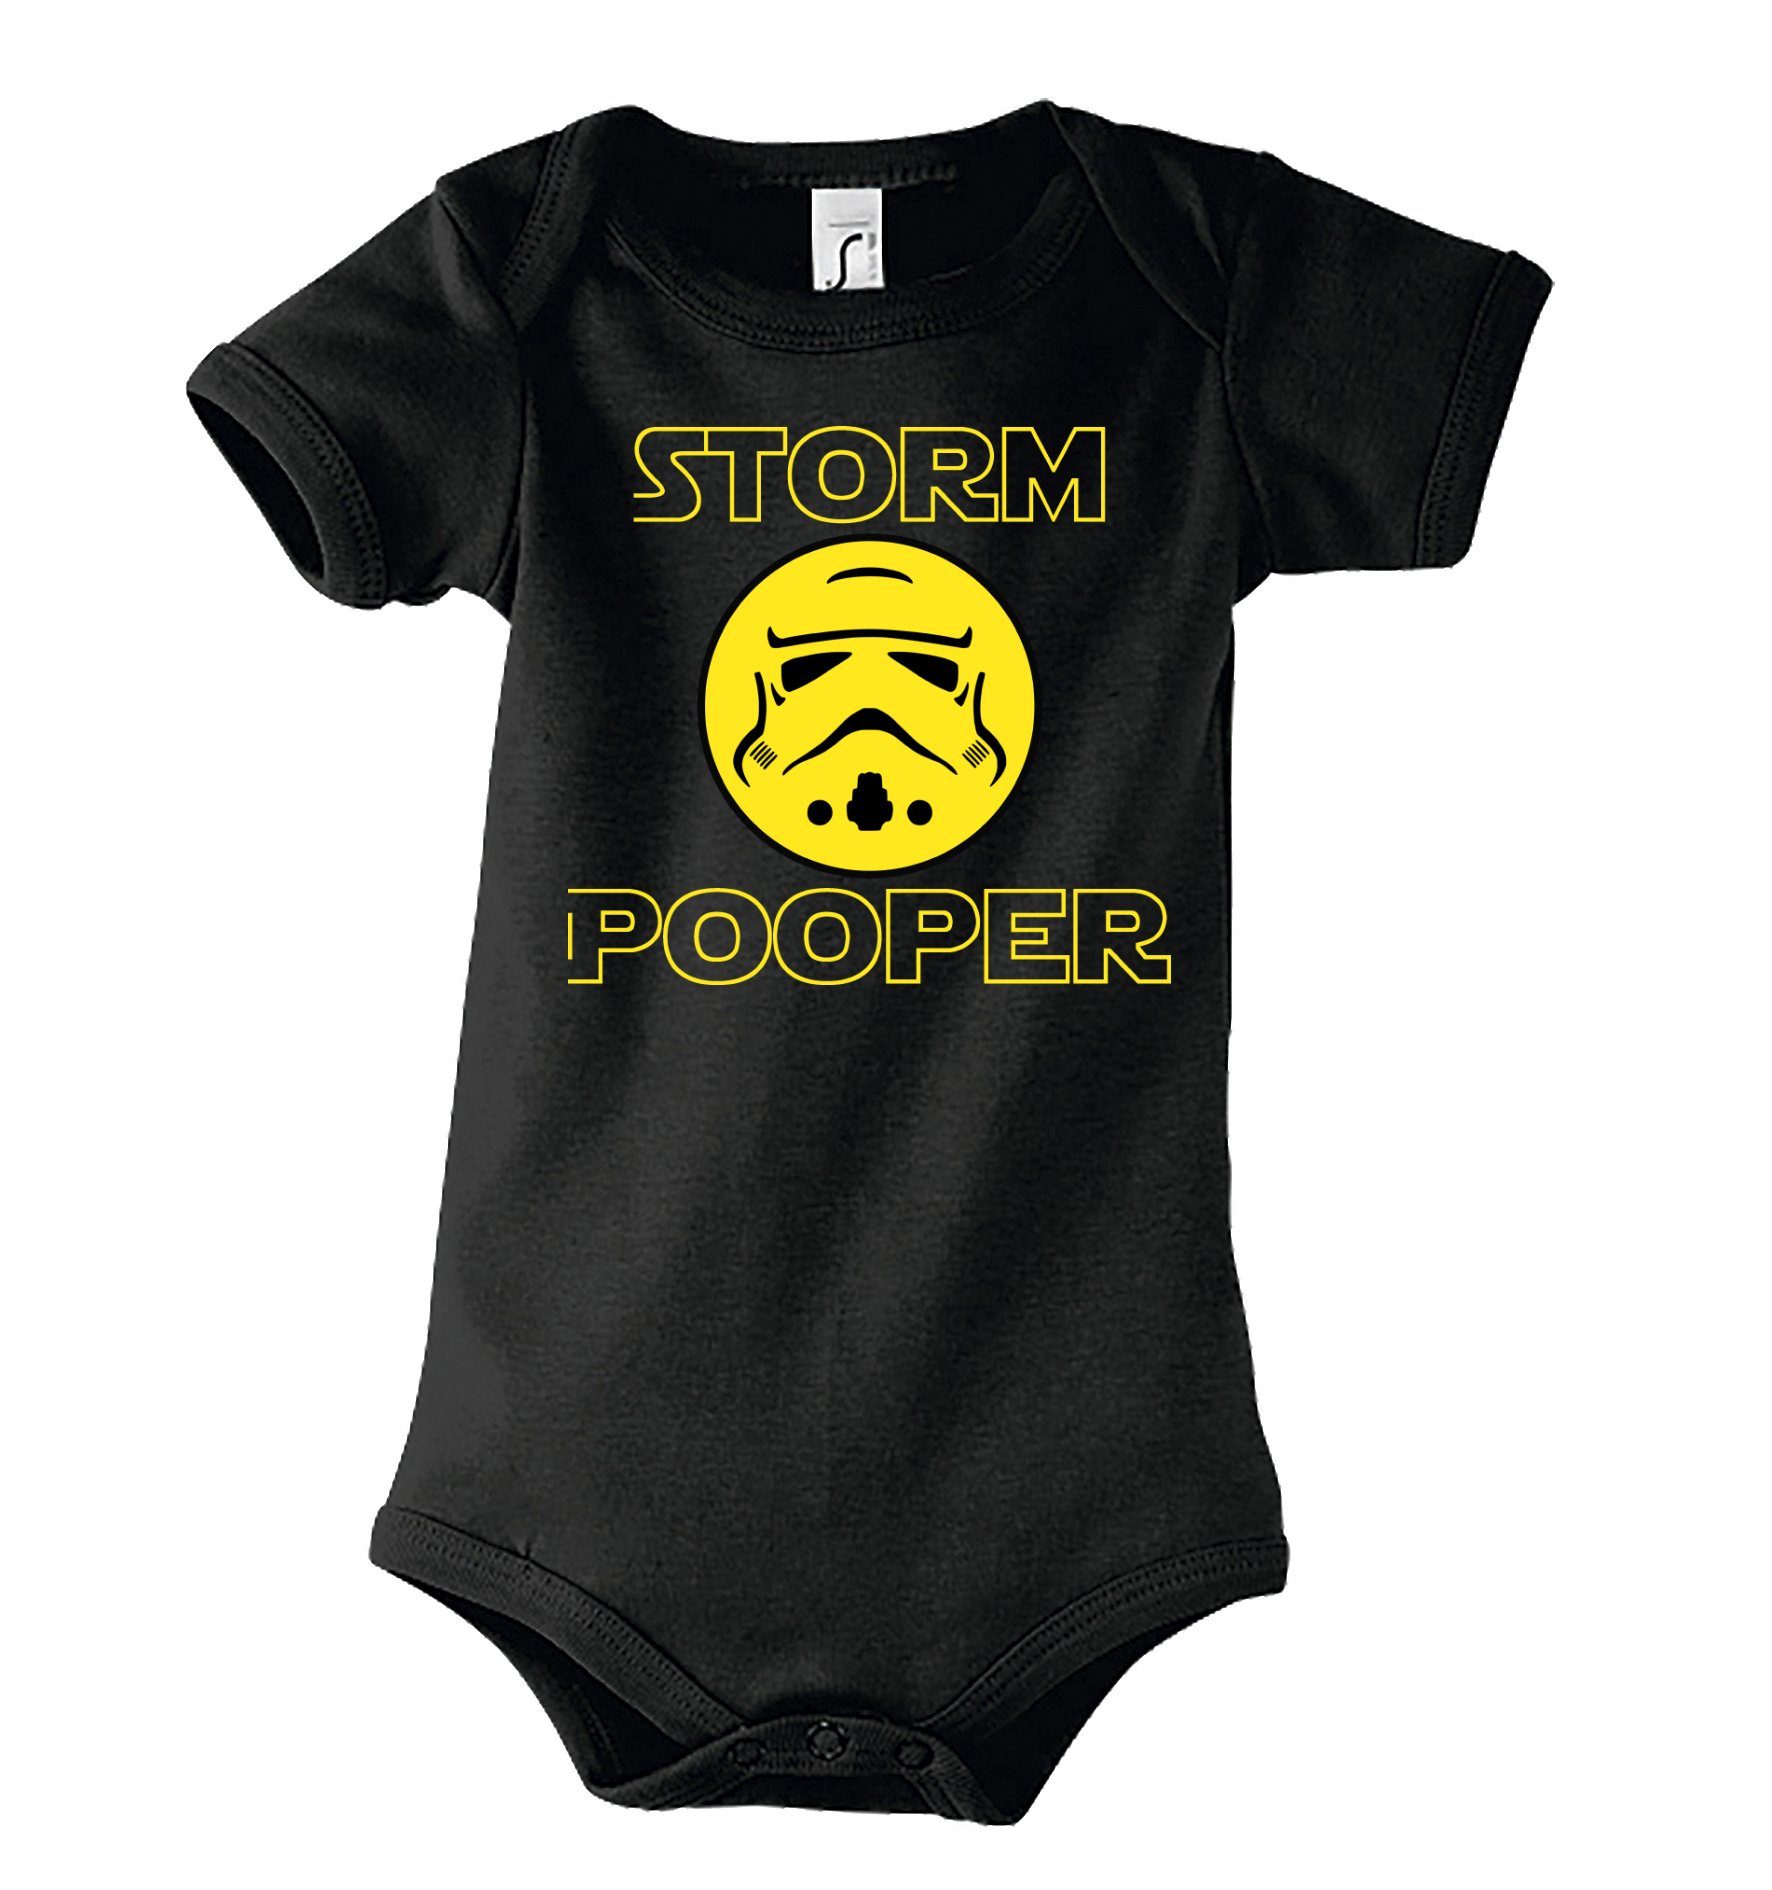 & Schwarz Designz Youth Kurzarm Spruch Pooper Baby Kurzarmbody lustigem Strampler mit Logo Storm Body Print Trooper